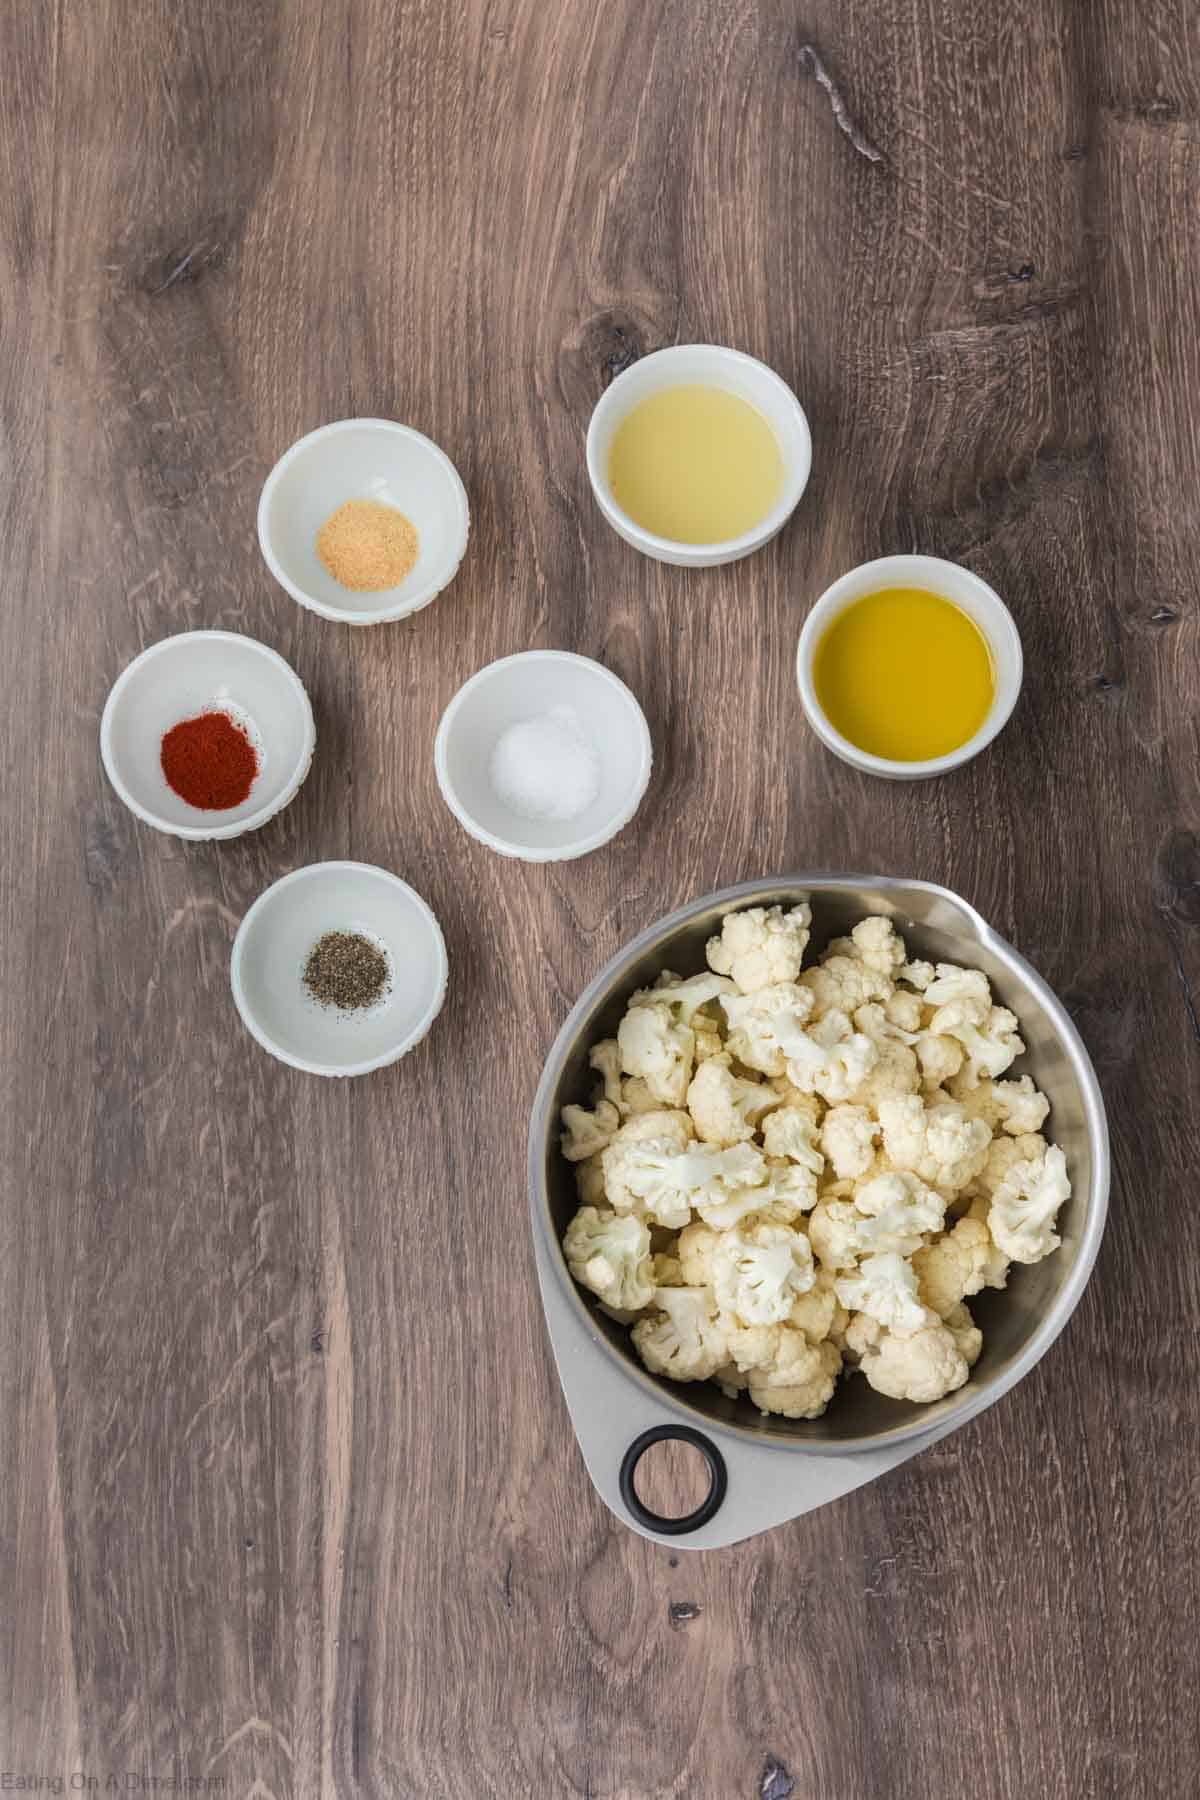 Ingredients - head of cauliflower, olive oil, lemon, smoked paprika, garlic powder, salt, pepper